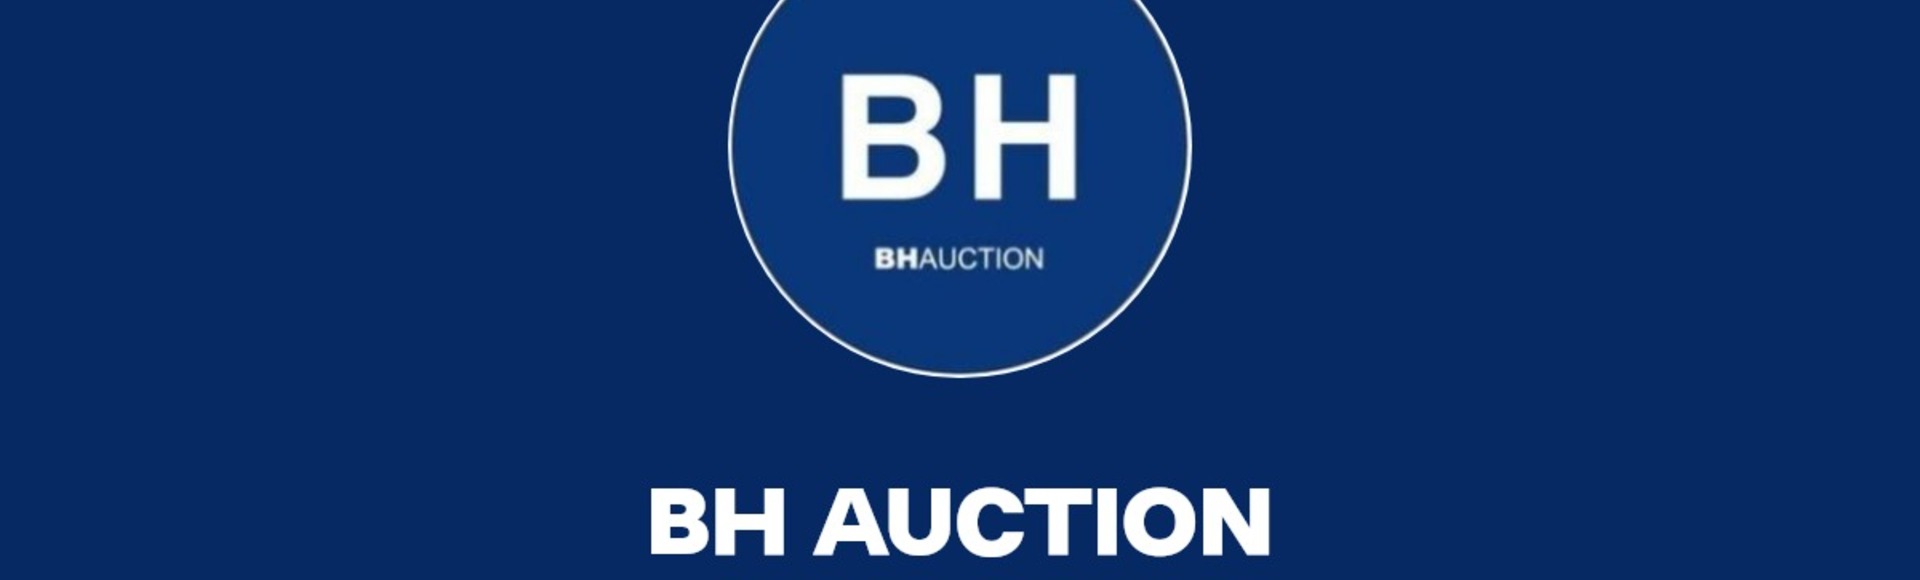 BH Auction